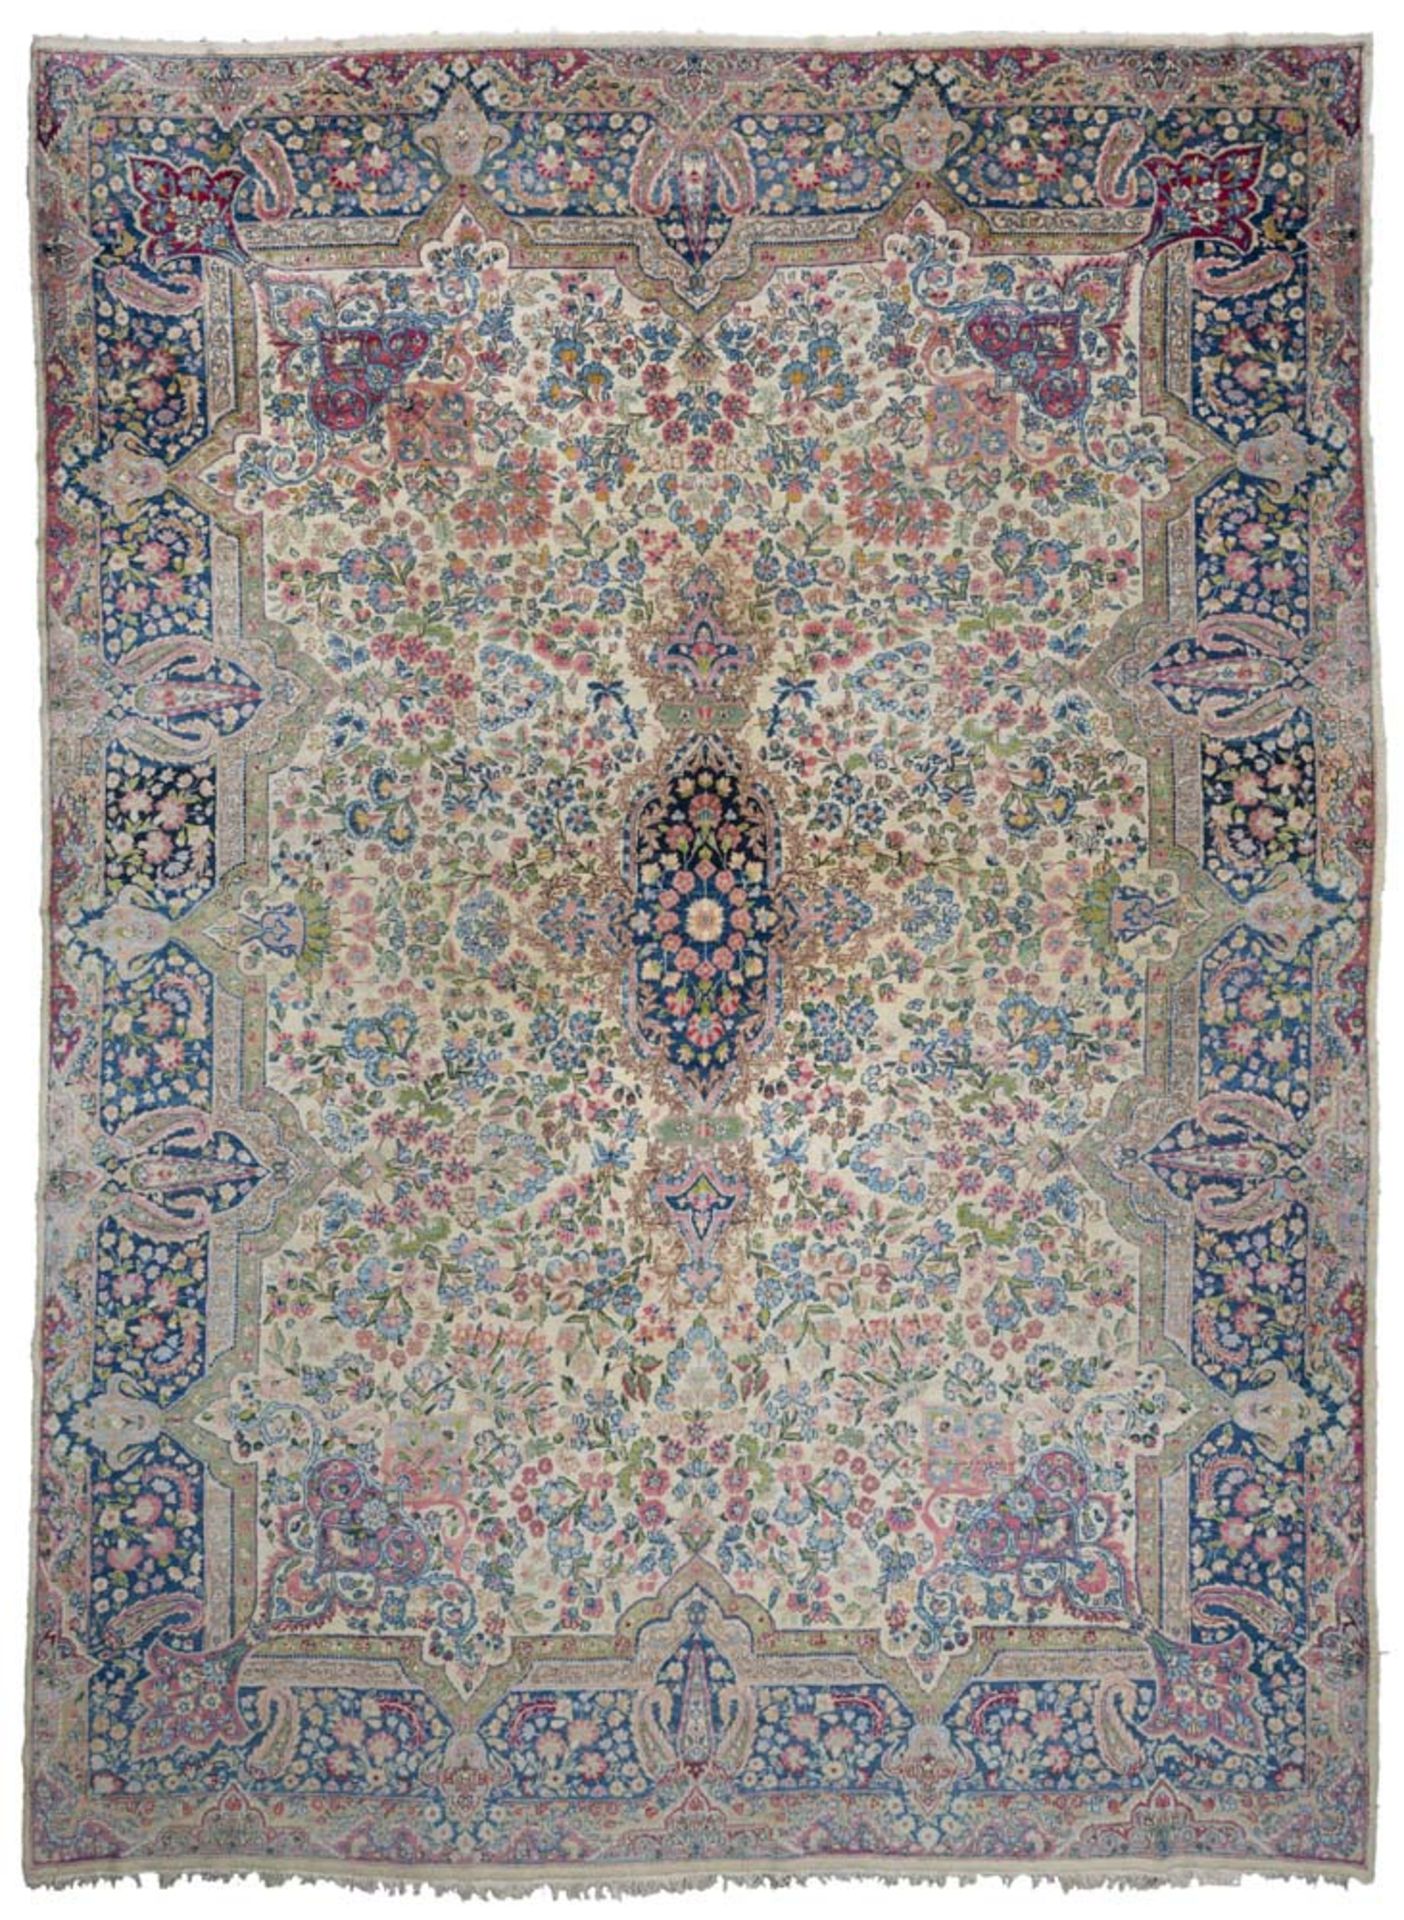 Kirman Carpet, early 20th century. Measures cm. 362 x 267.SPLENDIDO TAPPETO KIRMAN, INIZI XX